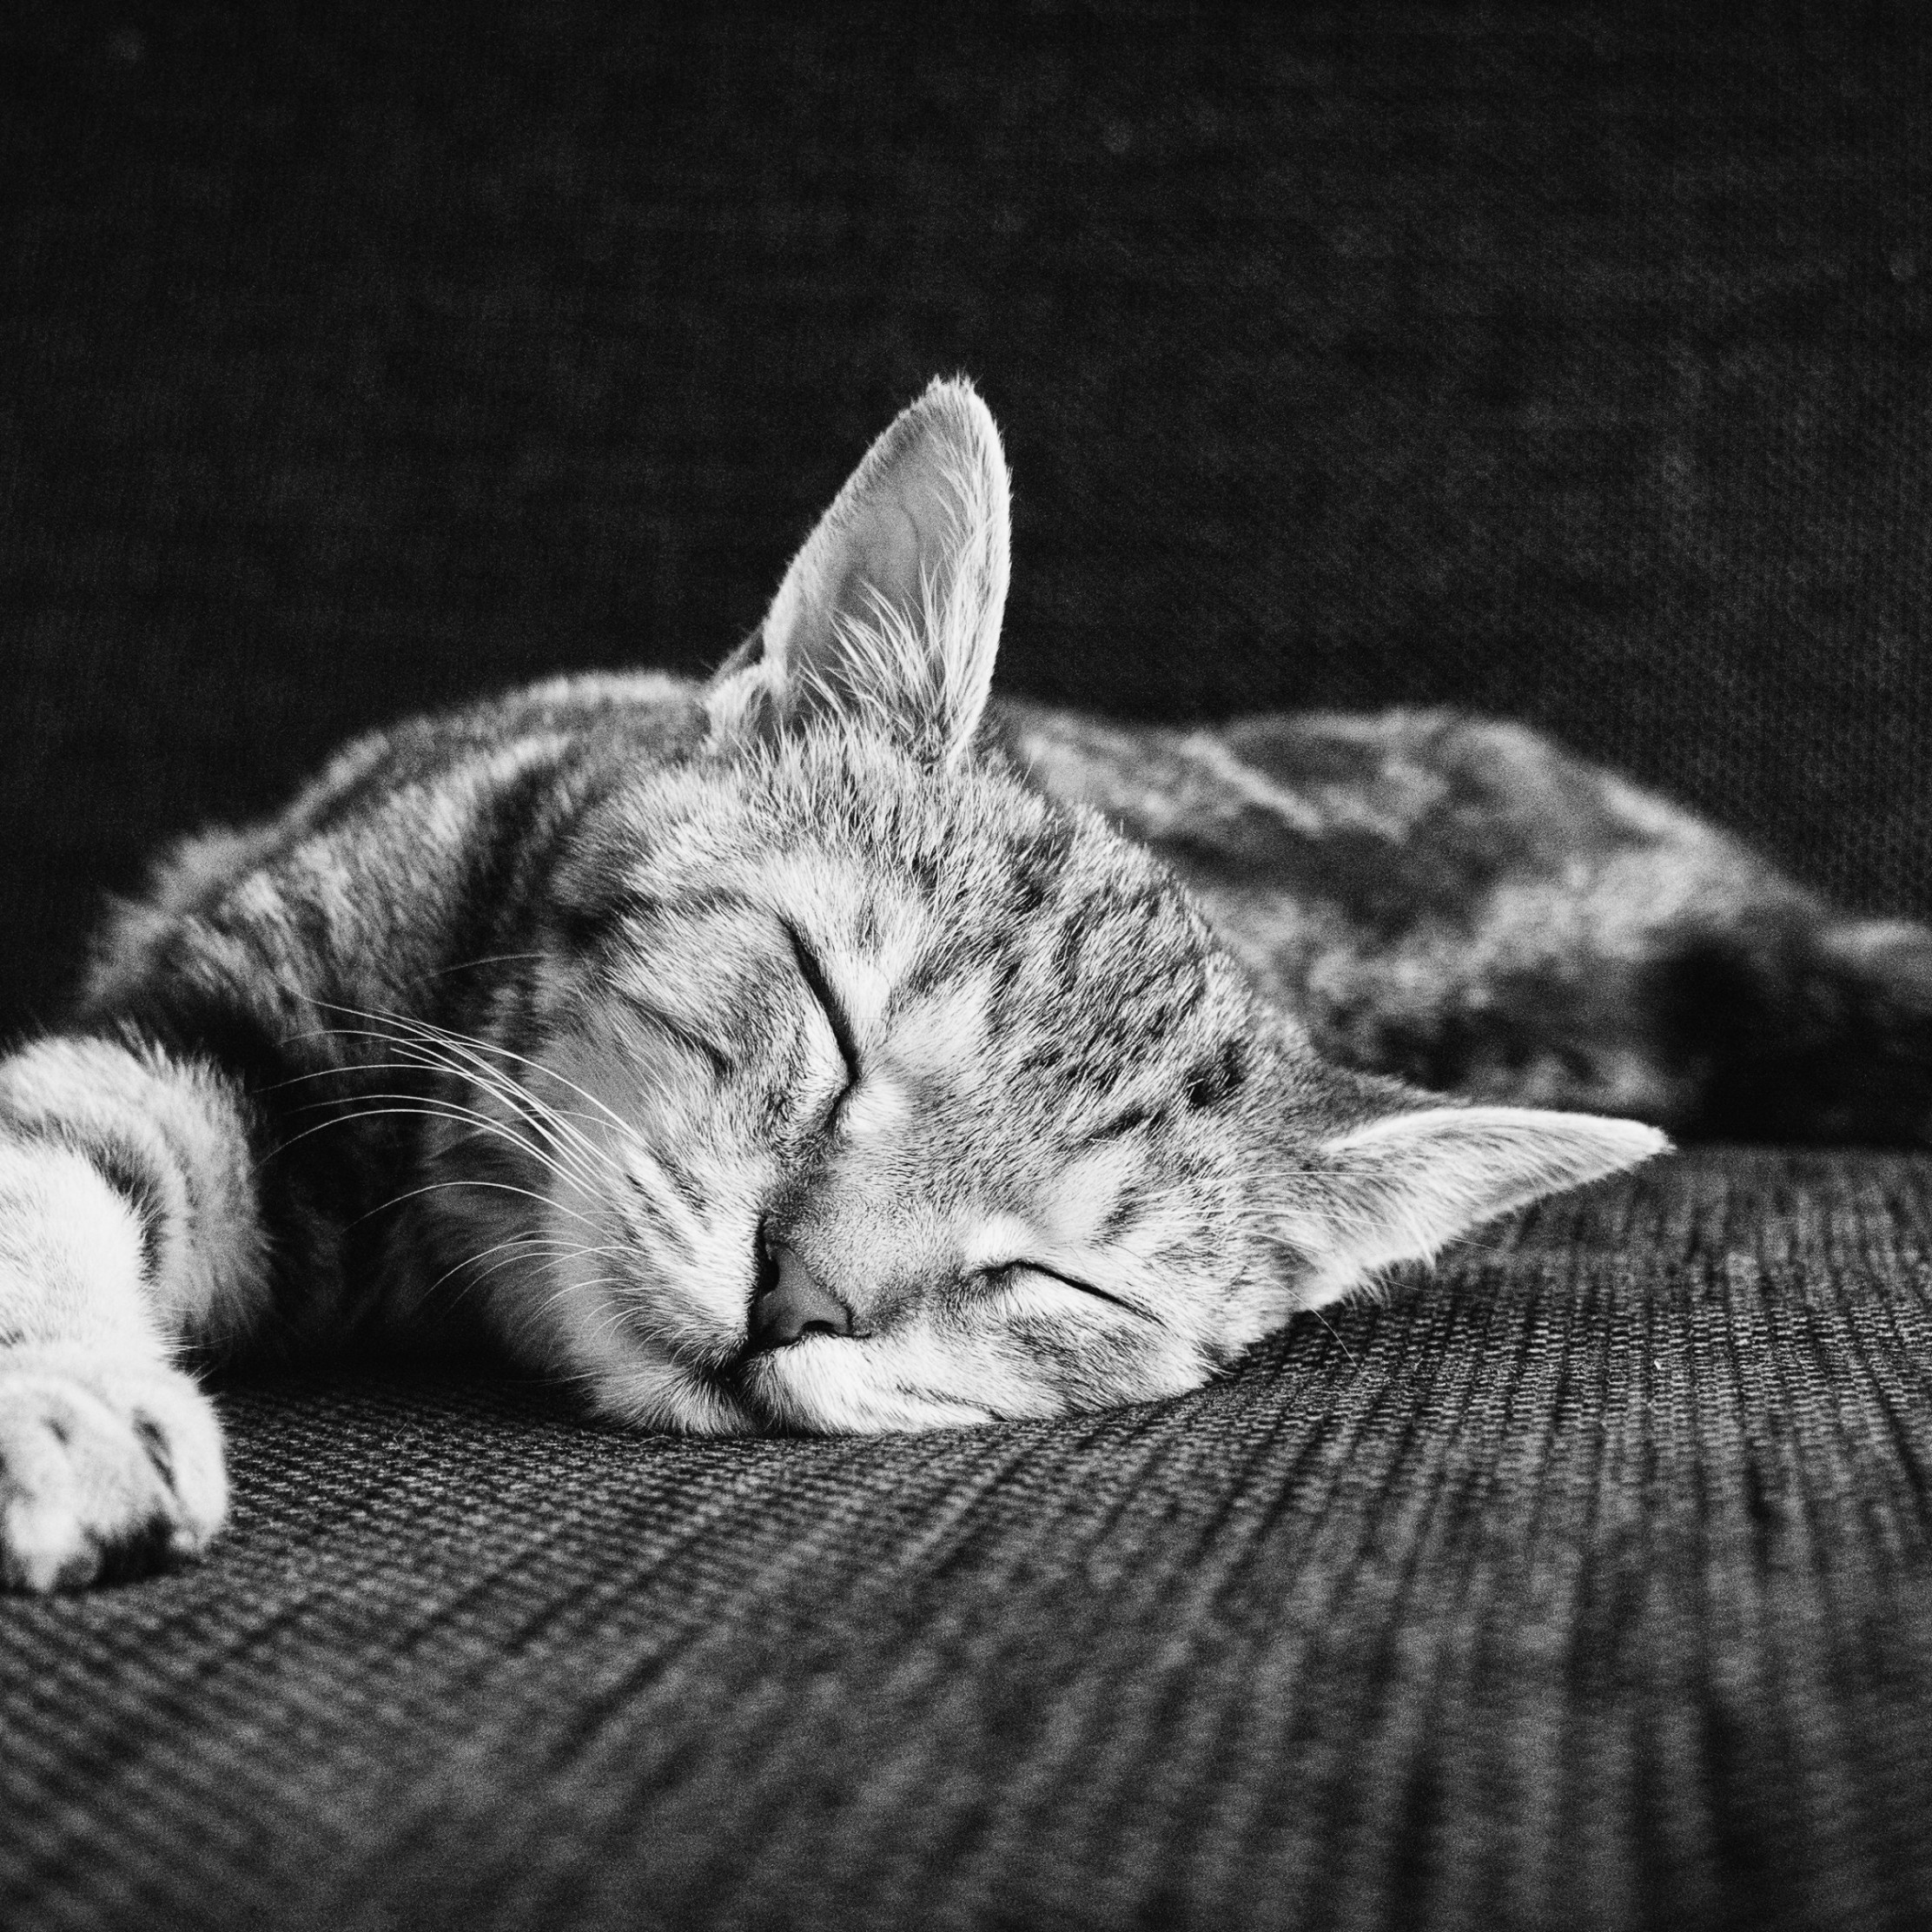 Zen of sleeping kitten wallpaper 2224x2224